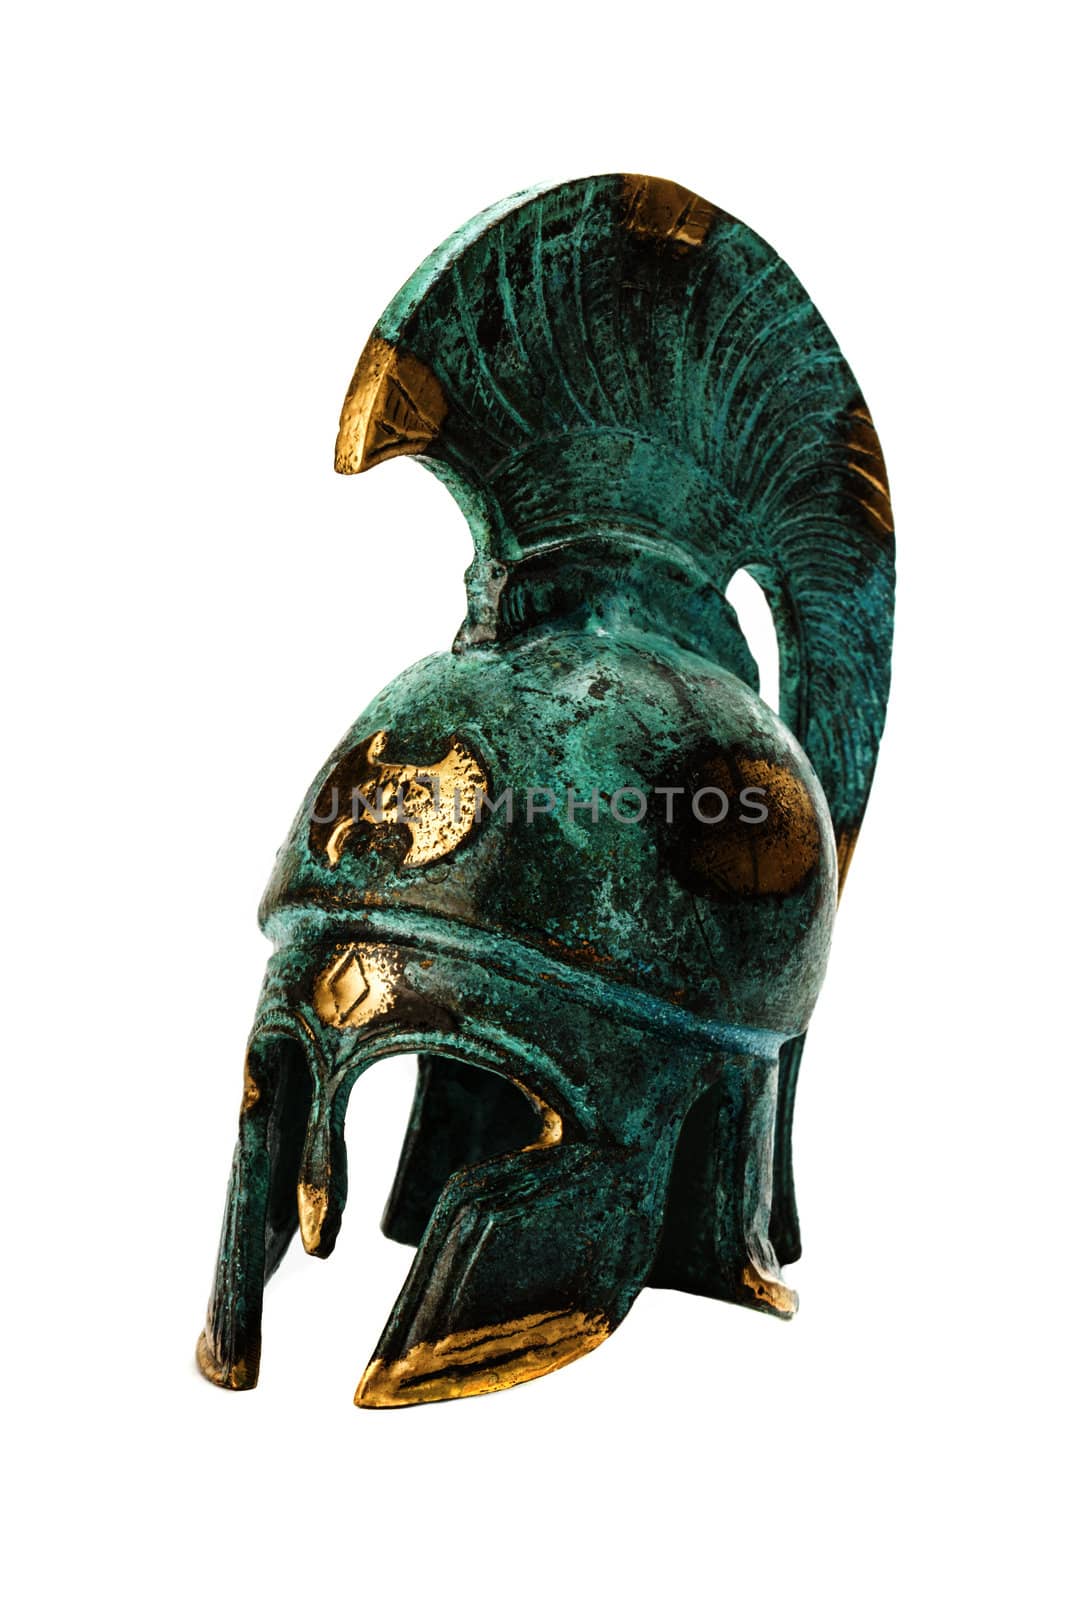 Souvenir ancient brass greek helmet over white by dedron